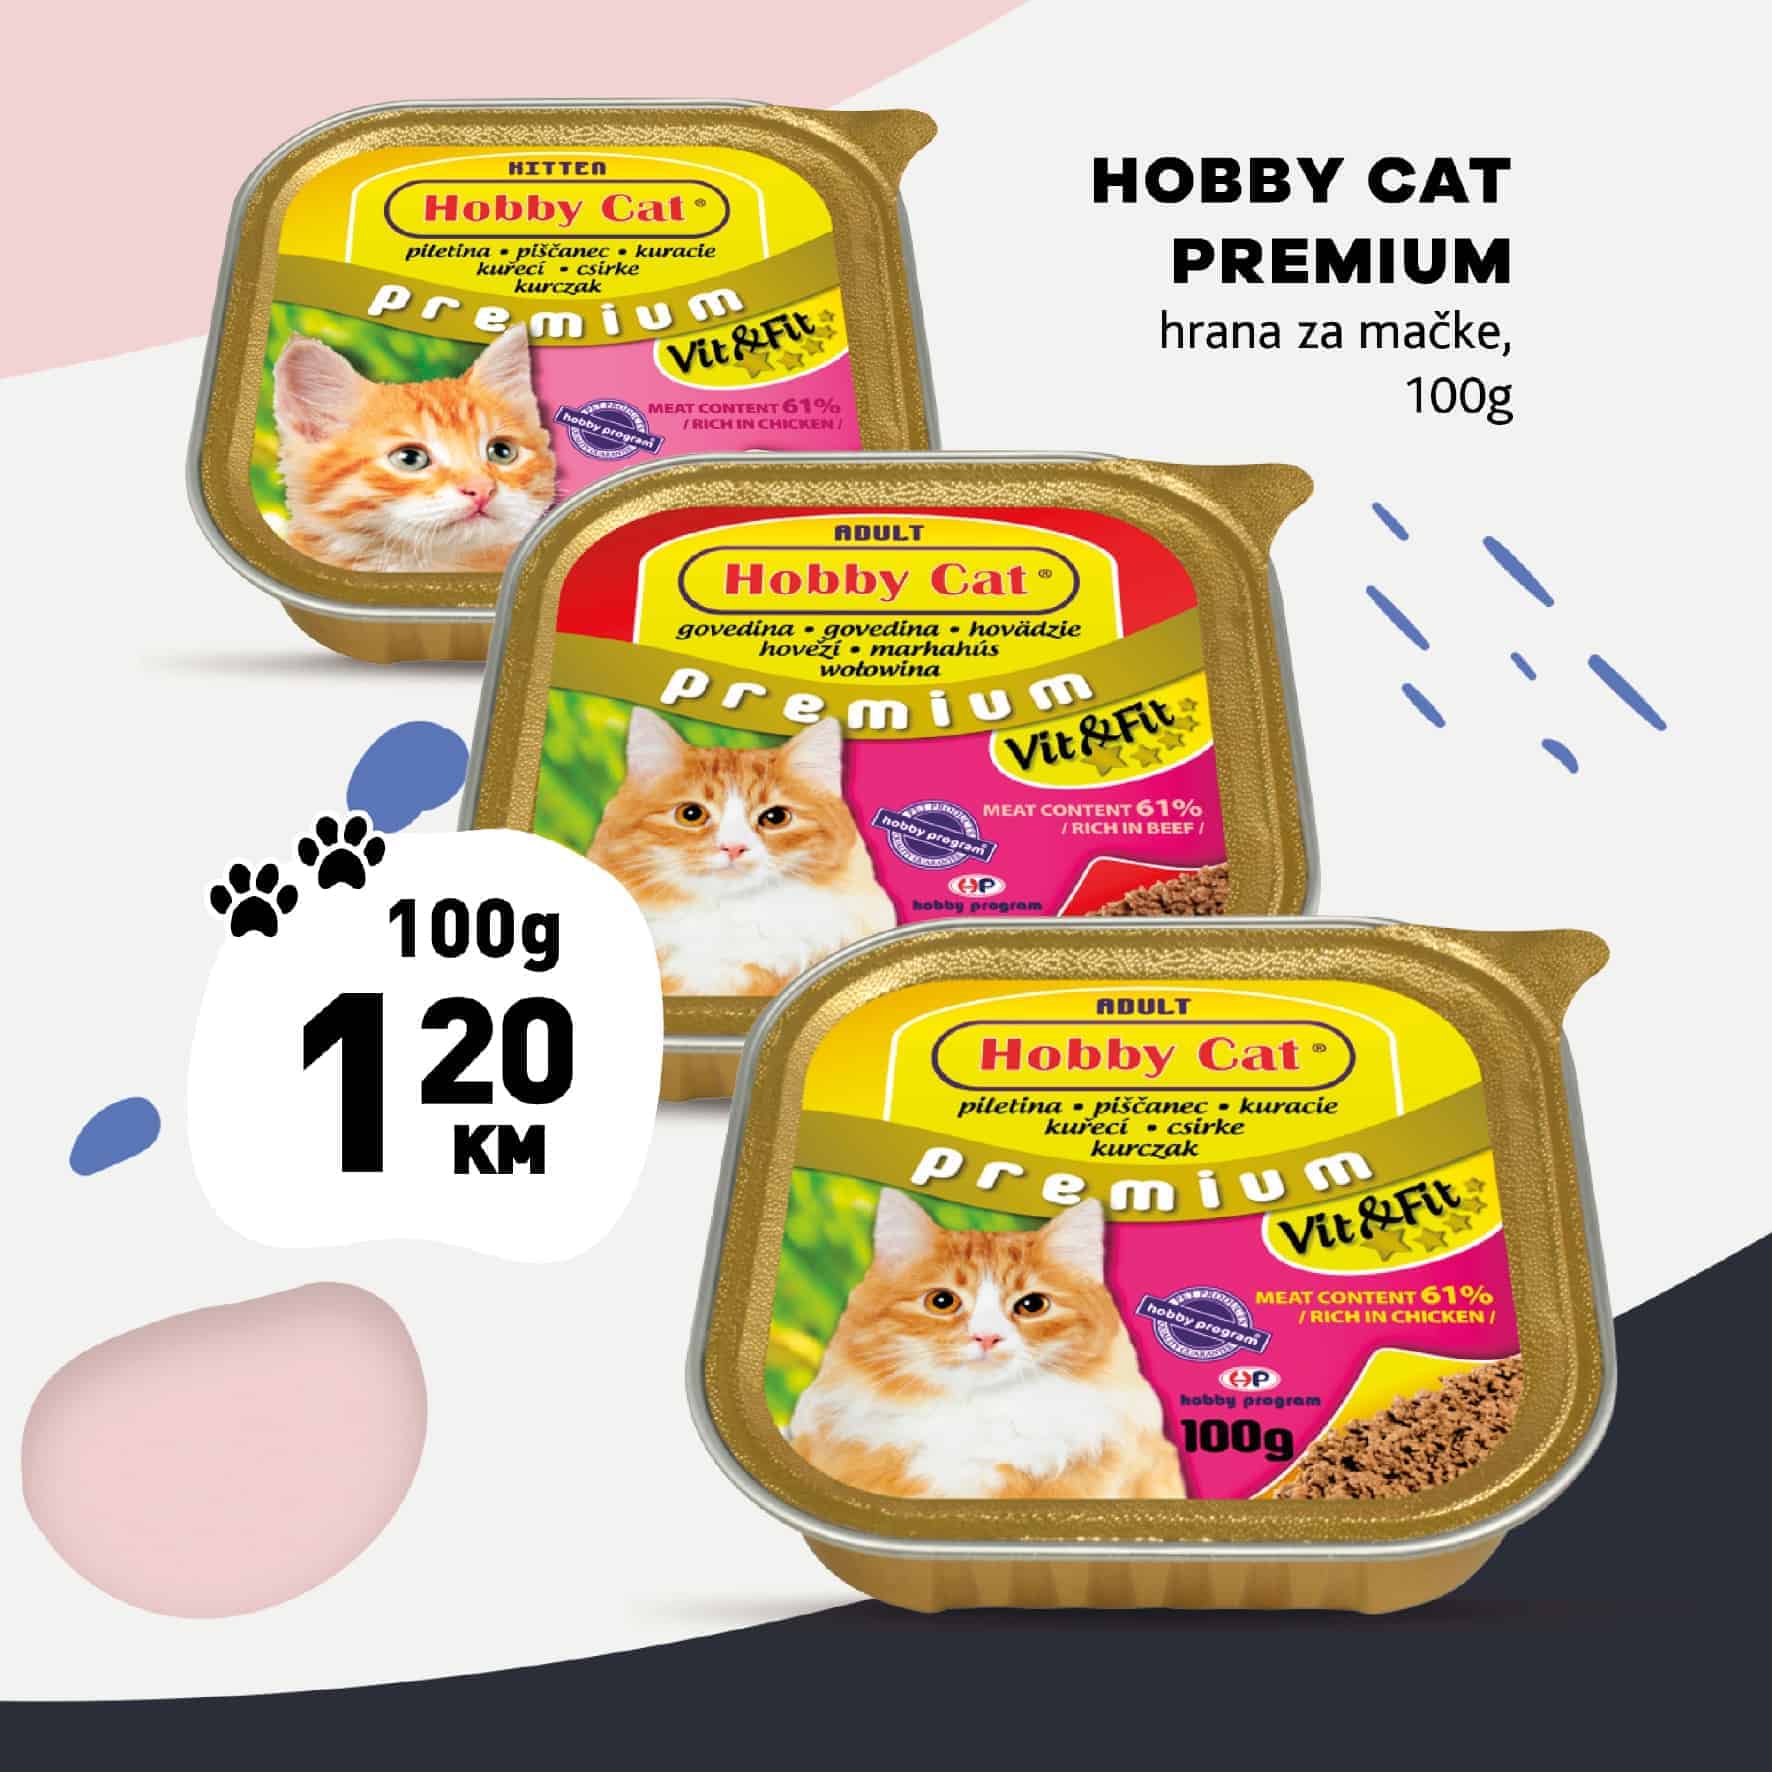 hrana za macke hobby cat premium